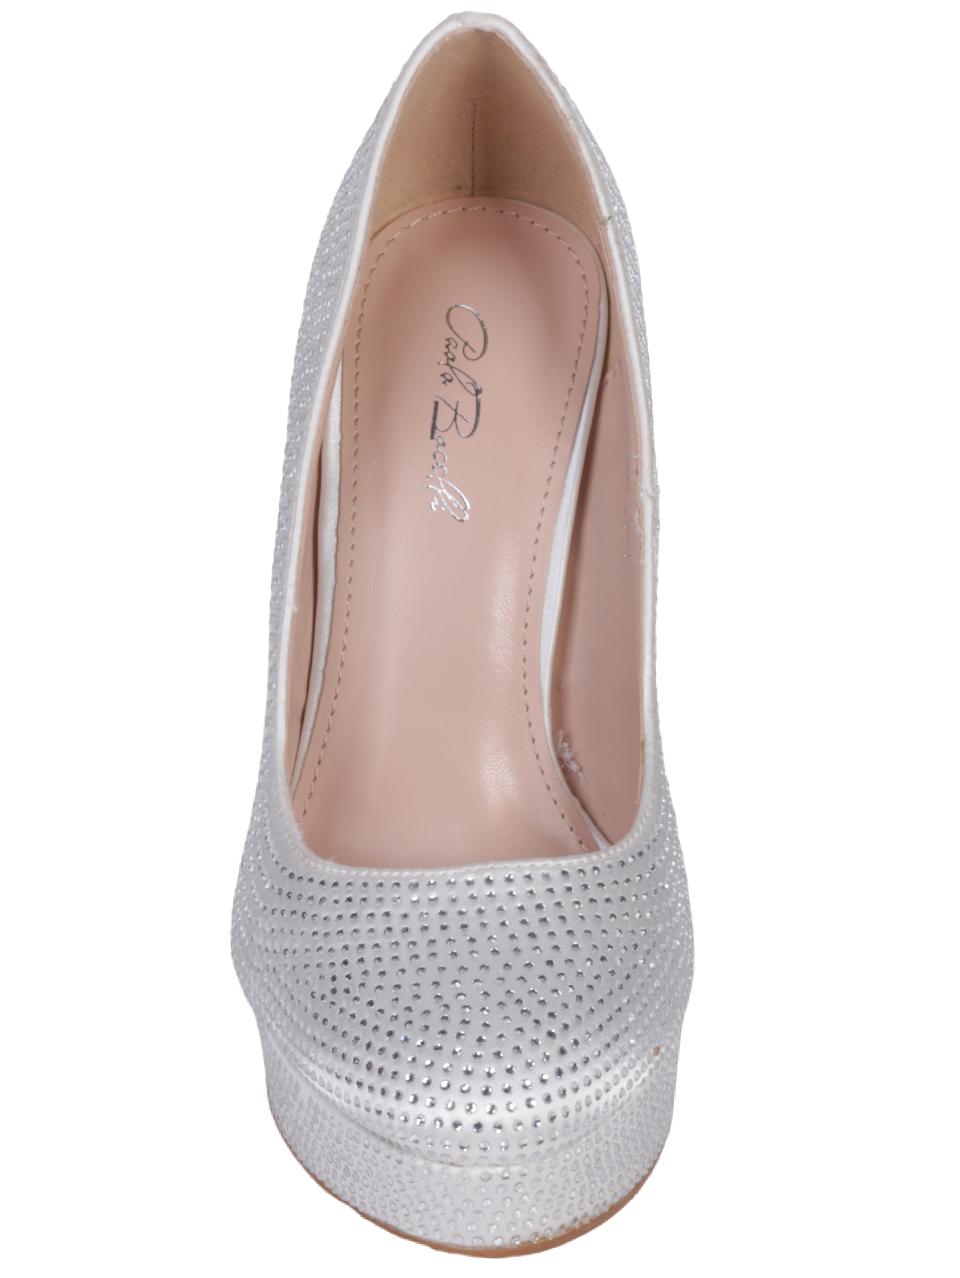 Елегантни дамски обувки с декоративни камъни в бяло 3M-23530 white